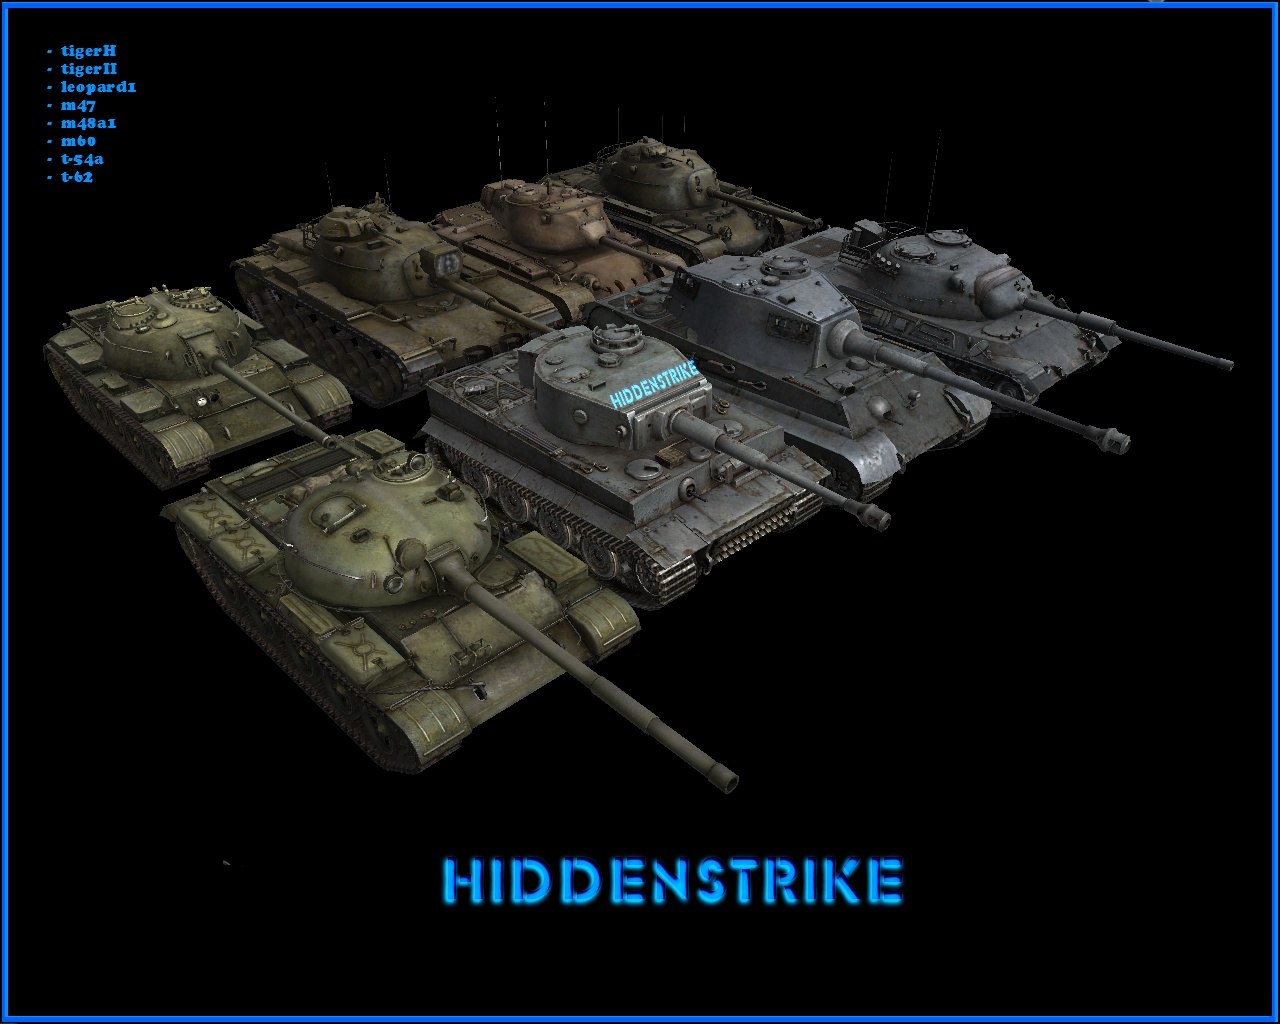 Скачать Tanks_Of_War_pak - автор Hiddenstrike (адаптация под стоковый AS1 - RuDamP79)